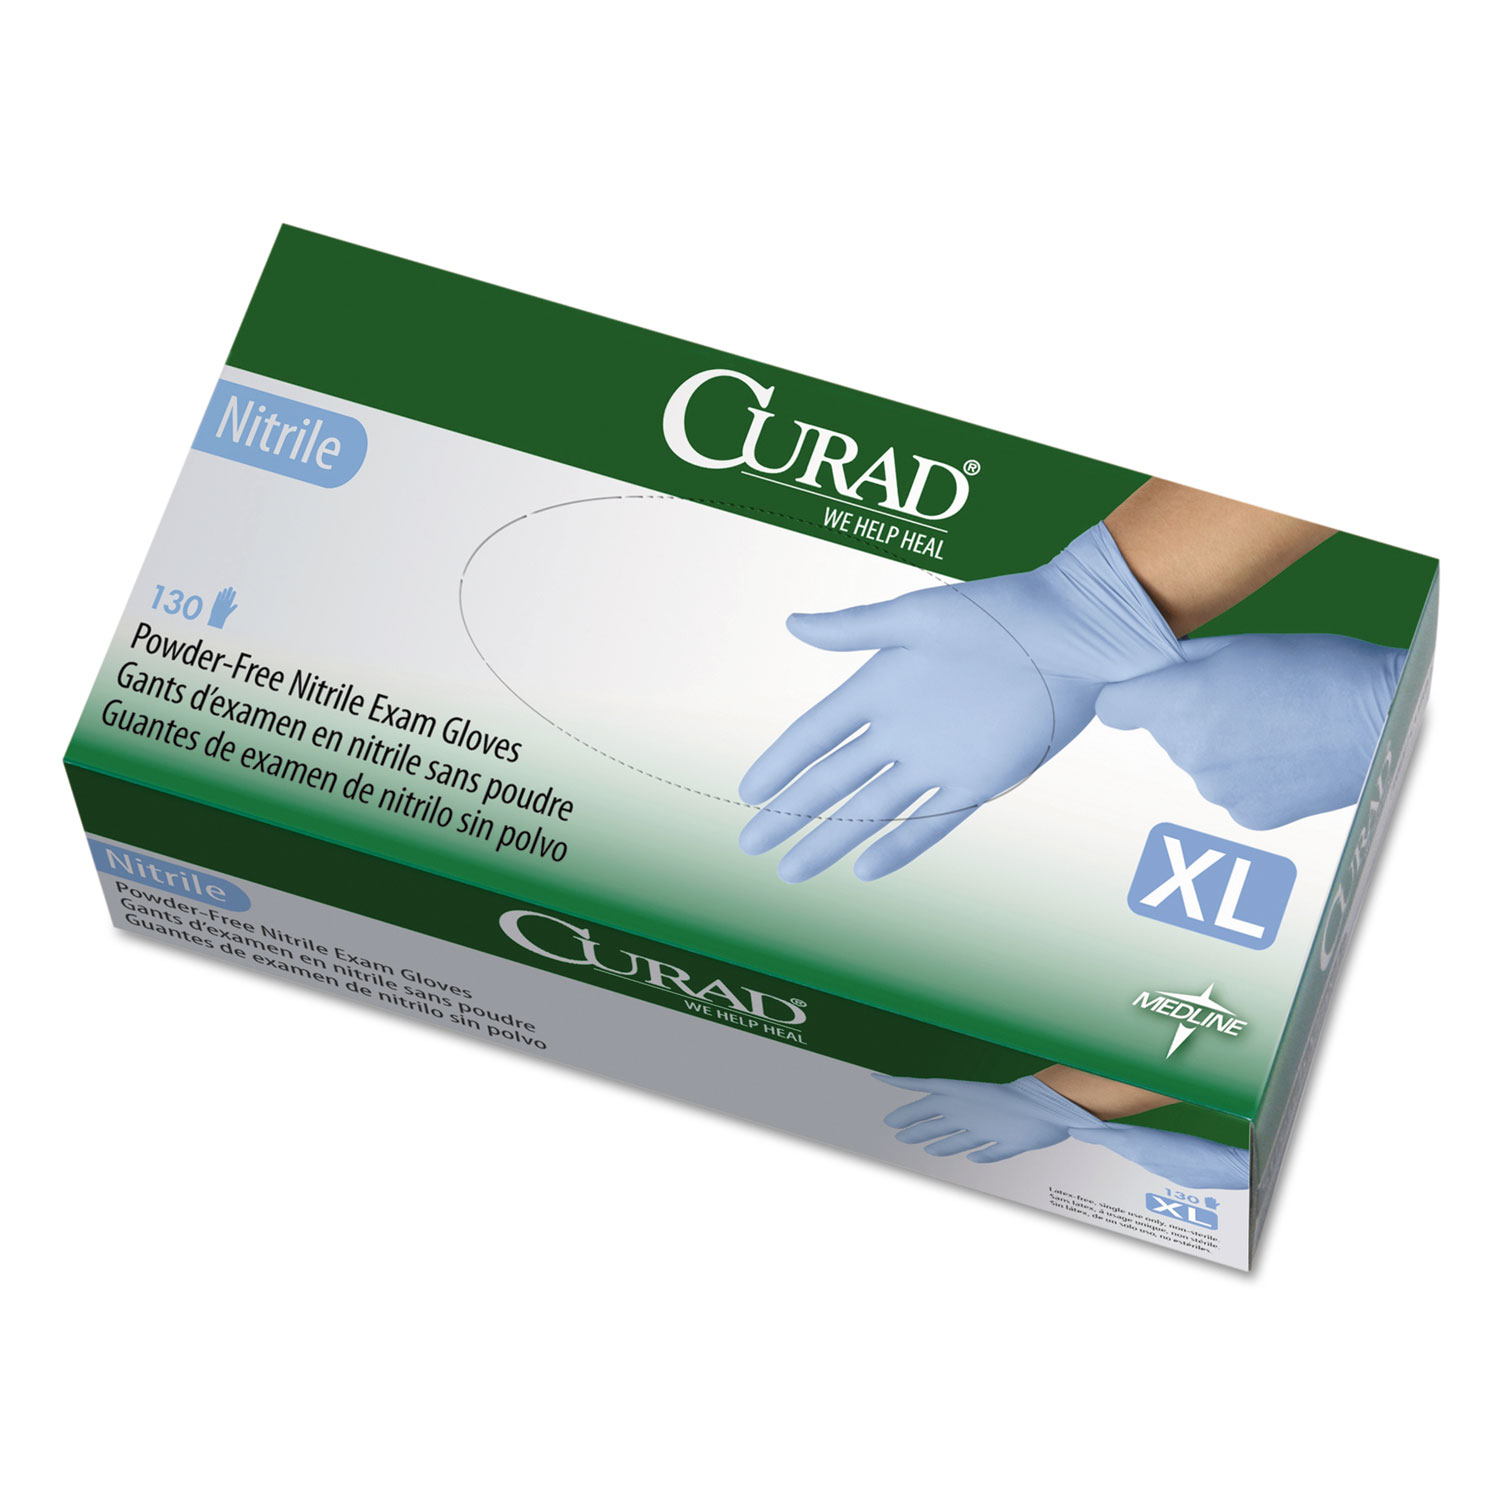  Curad CUR9317 Nitrile Exam Glove, Powder-Free, X-Large, 130/Box (MIICUR9317) 